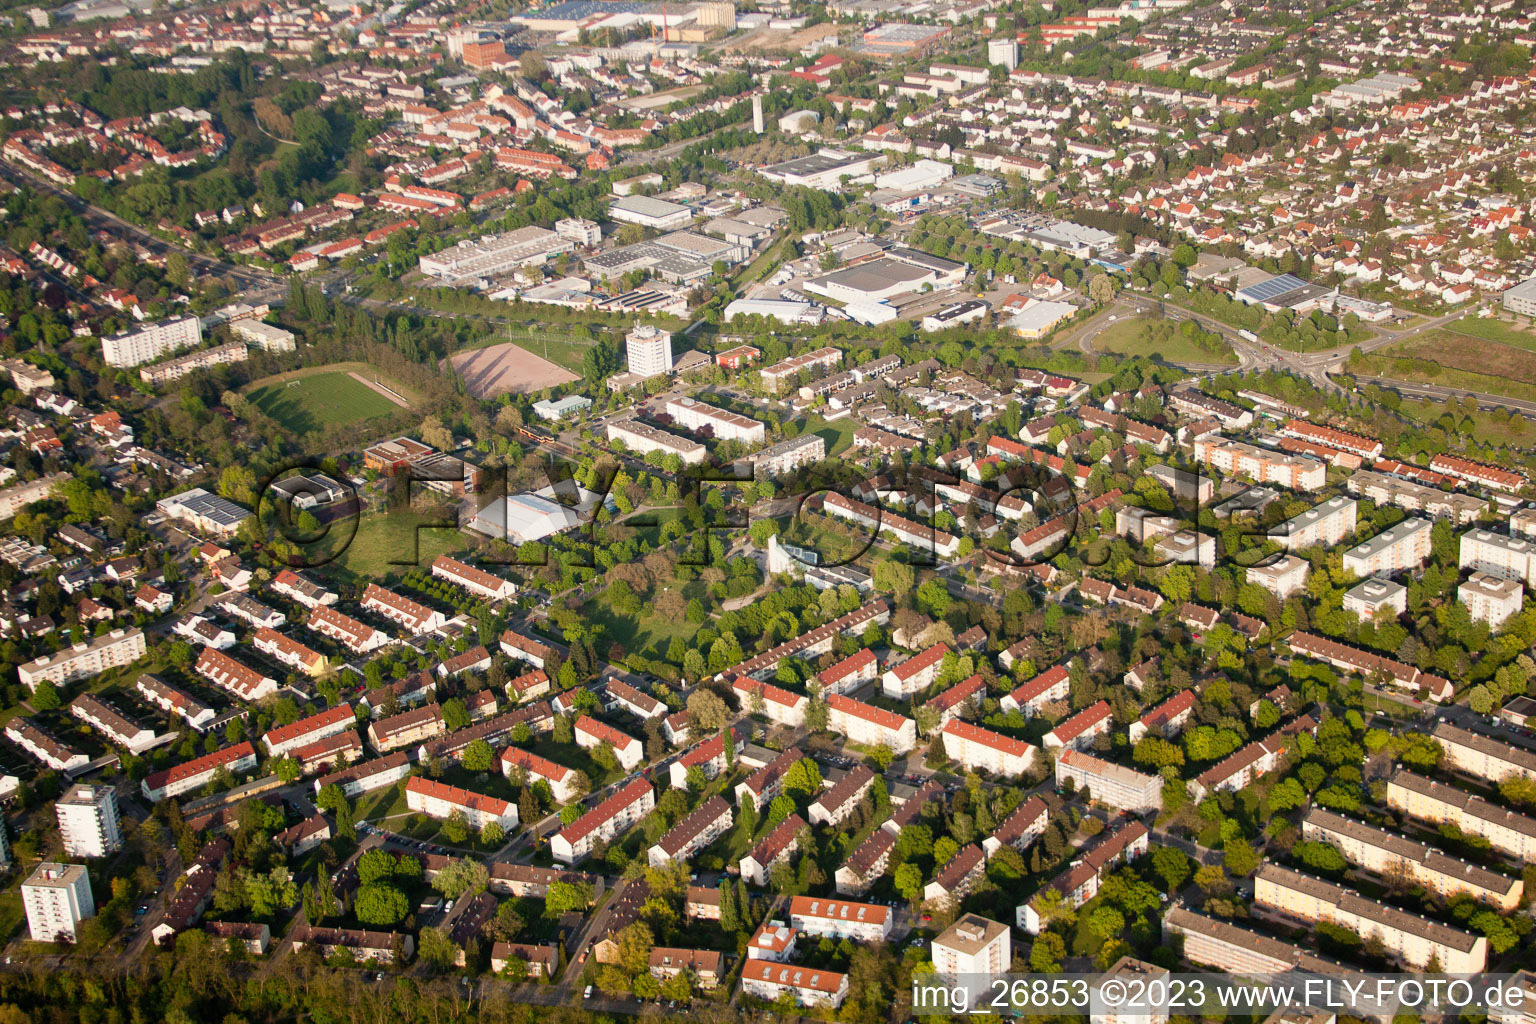 Bird's eye view of District Daxlanden in Karlsruhe in the state Baden-Wuerttemberg, Germany